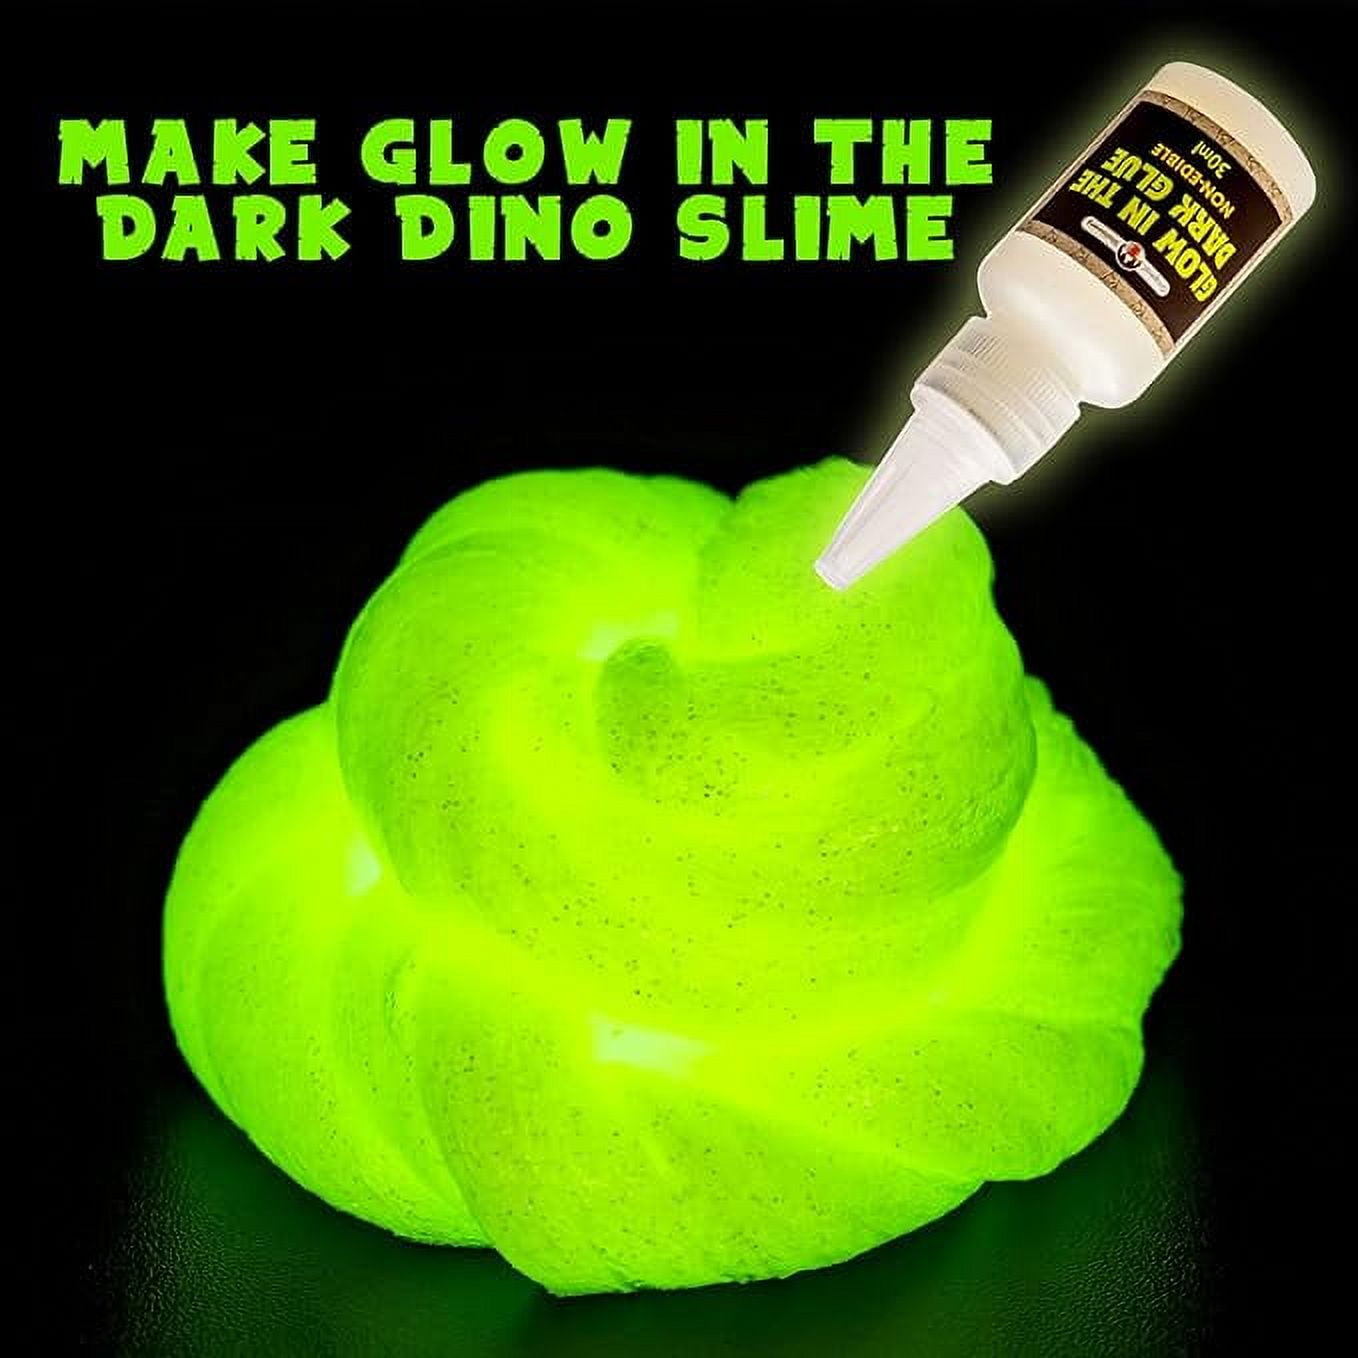 Elmer's Glue Slime Kit, Dinosaur Night, Makes Nepal